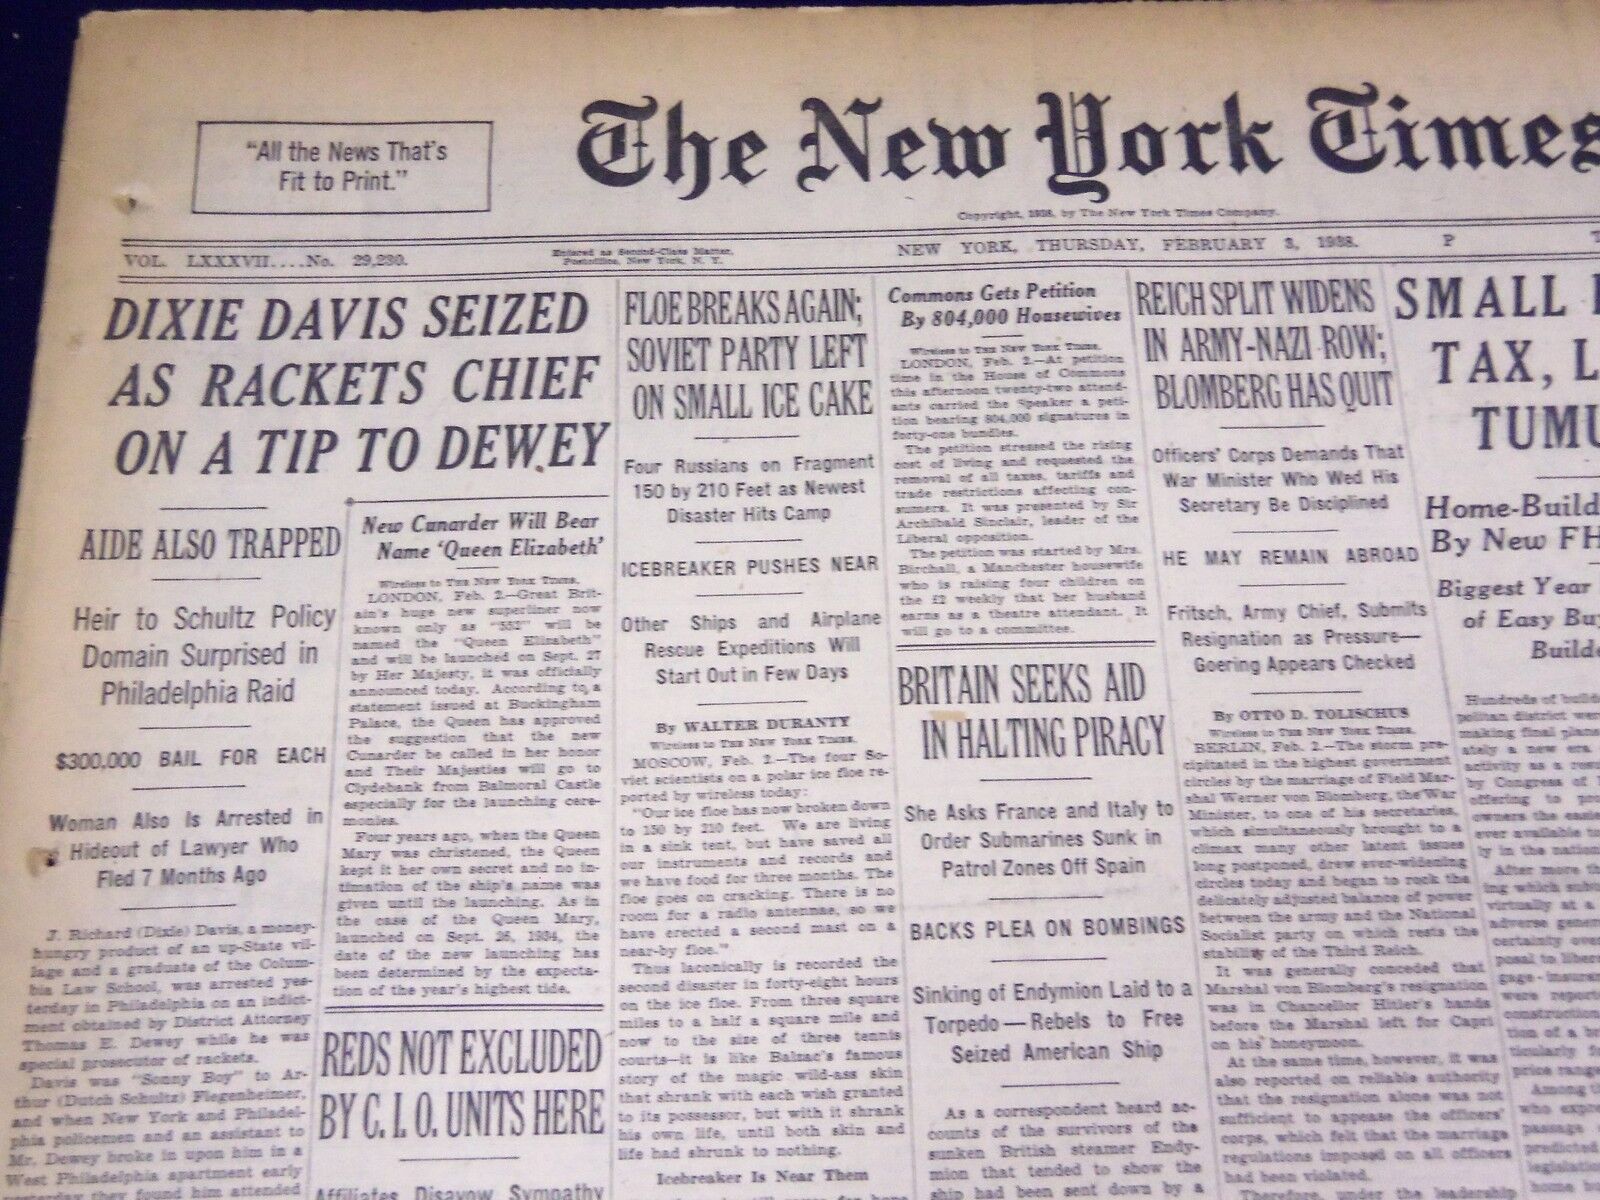 1937 FEB 3 NEW YORK TIMES - DIXIE DAVIS SEIZED AS RACKETS CHIEF ON DEWEY- NT 737